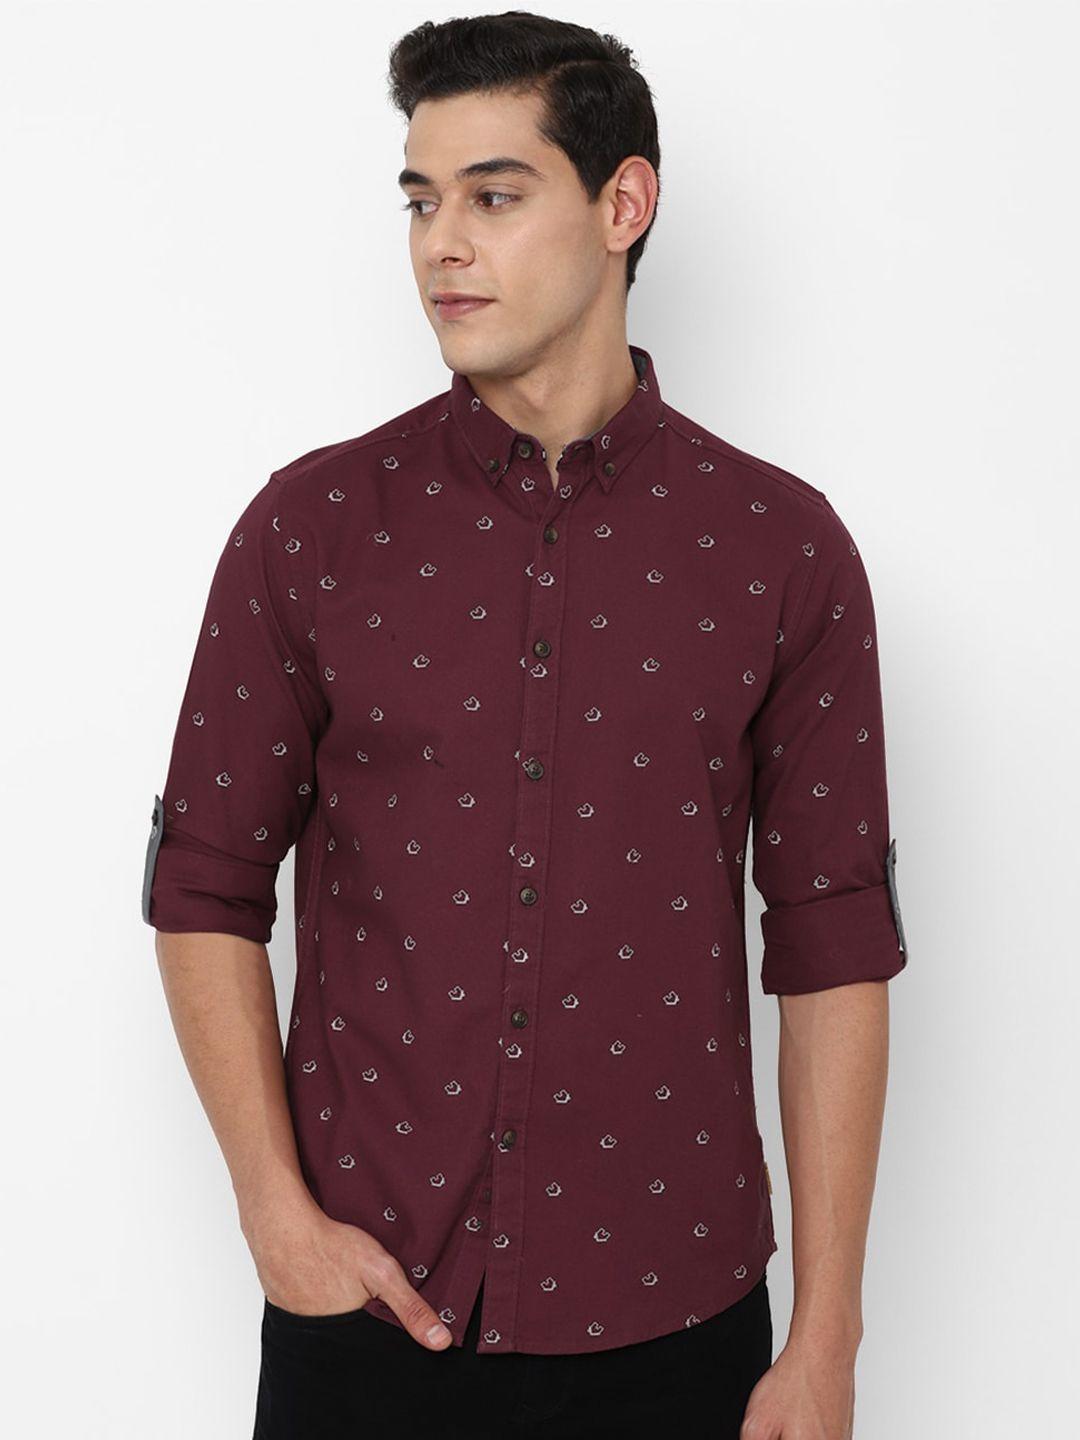 forever-21-men-maroon-printed-casual-shirt